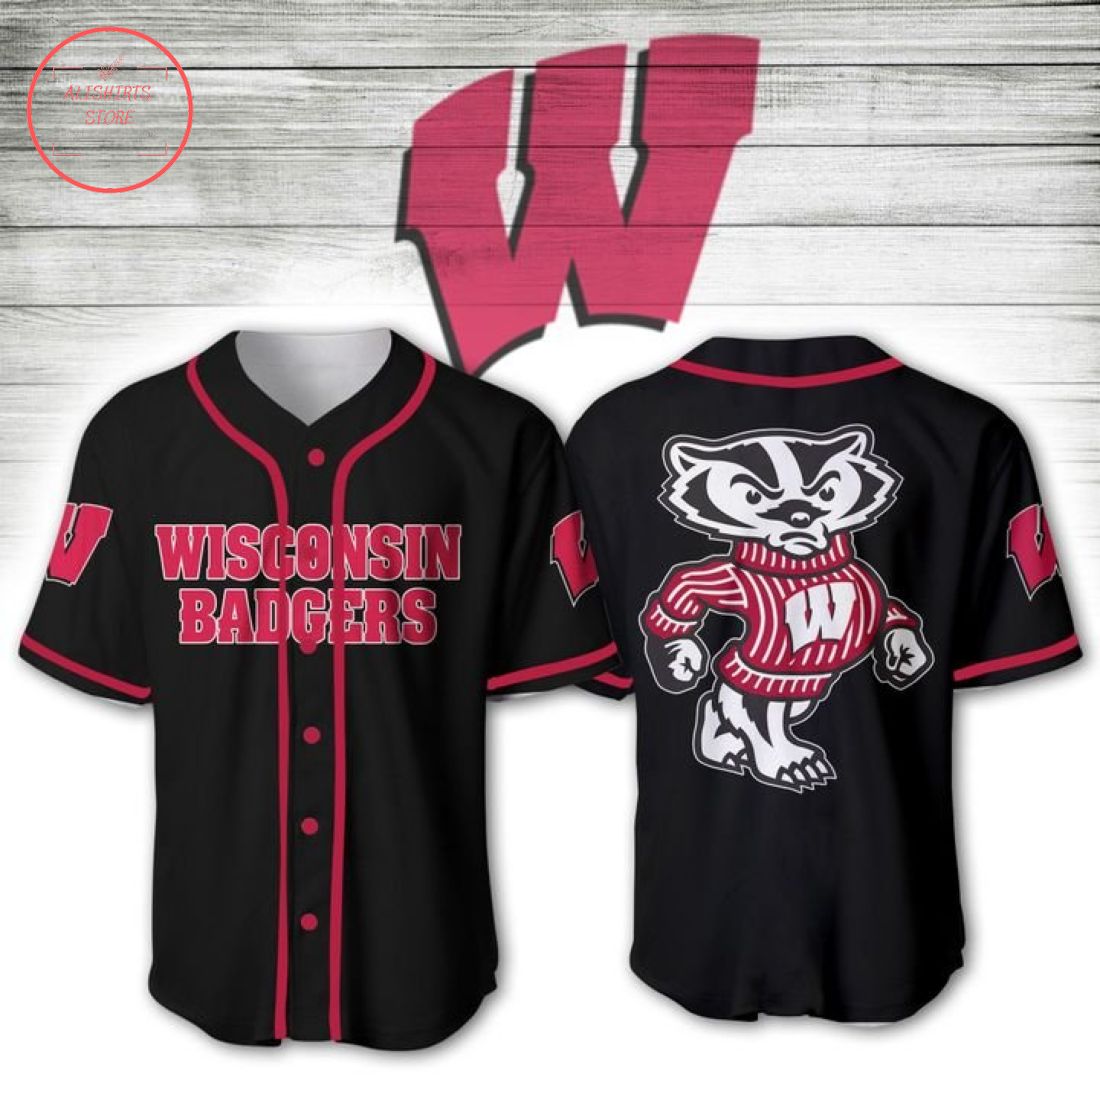 Wisconsin Badgers NCAA Baseball Jersey